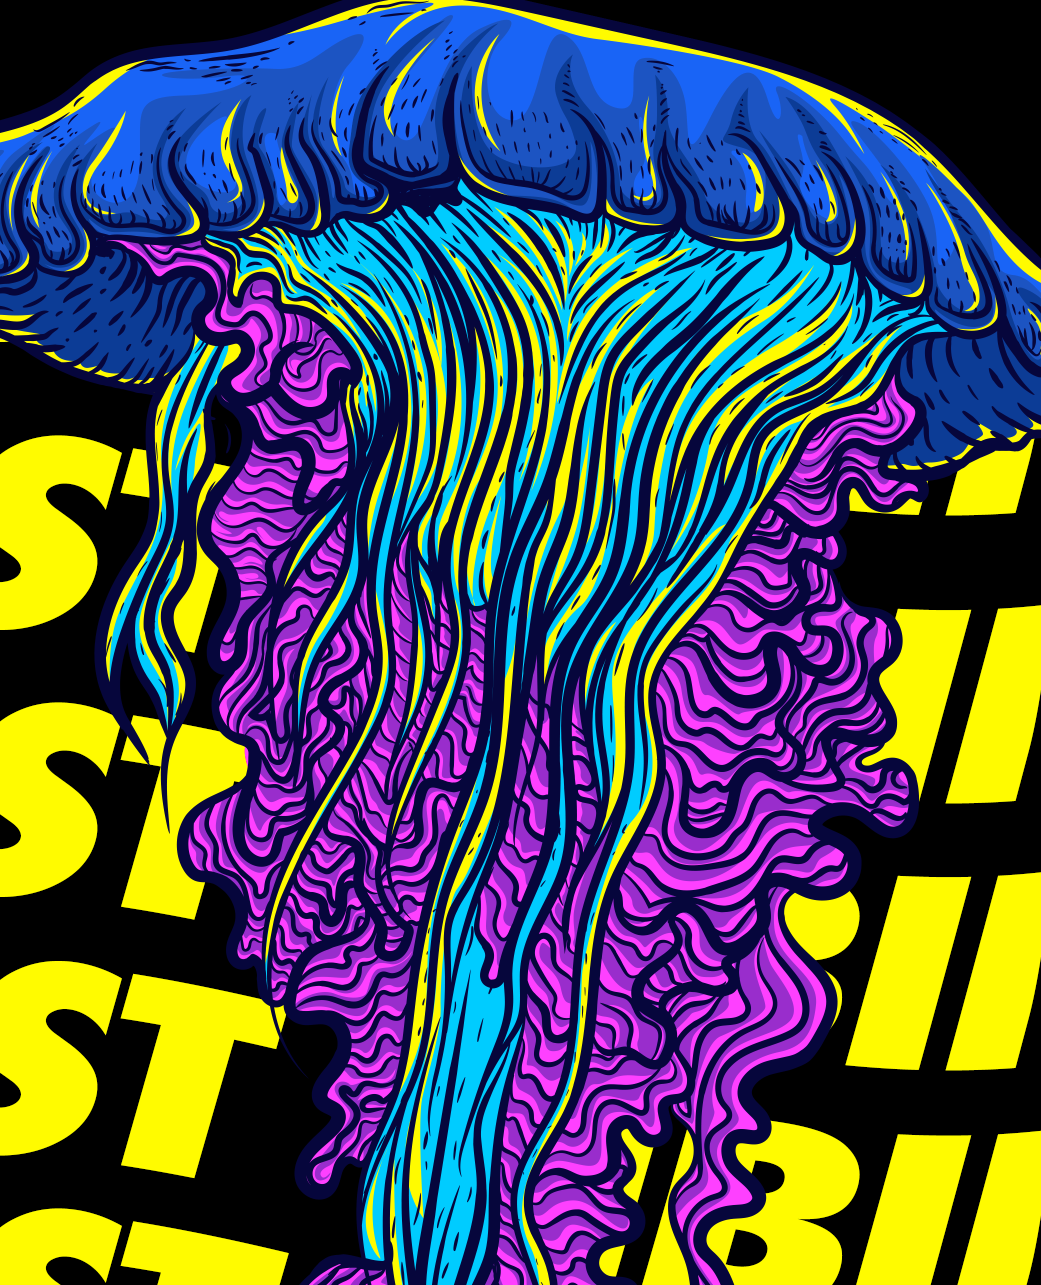 StonerDays Just Vibin' men's t-shirt with vibrant jellyfish design on black background